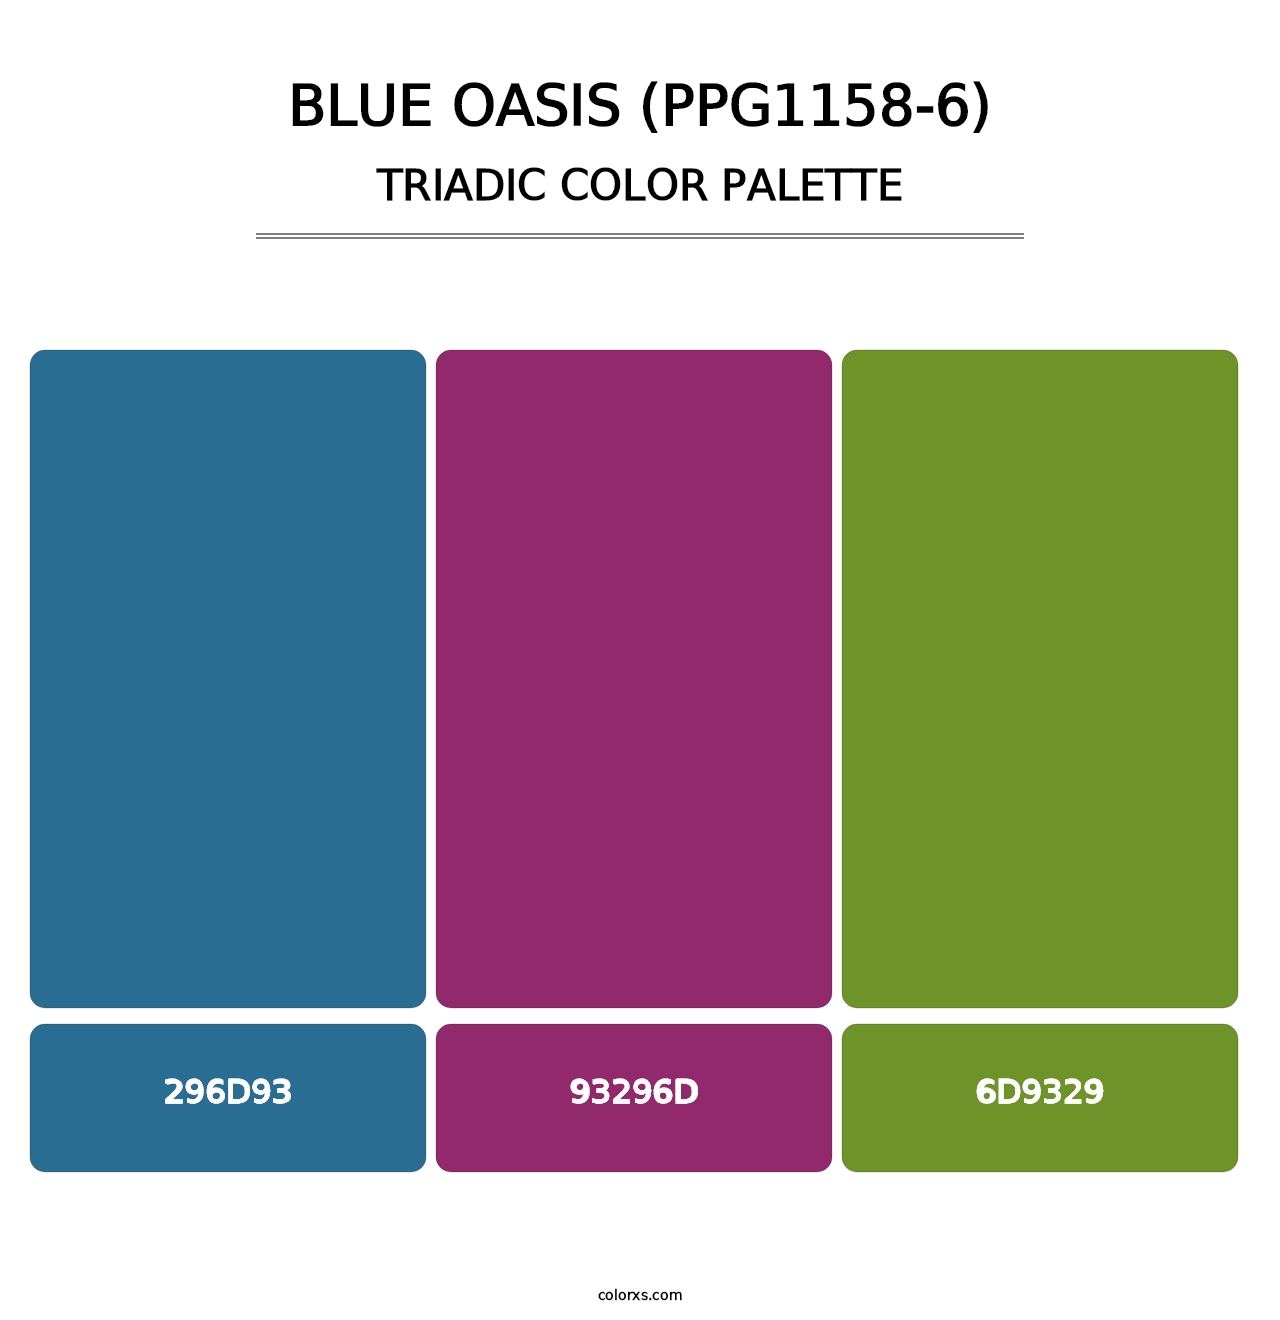 Blue Oasis (PPG1158-6) - Triadic Color Palette